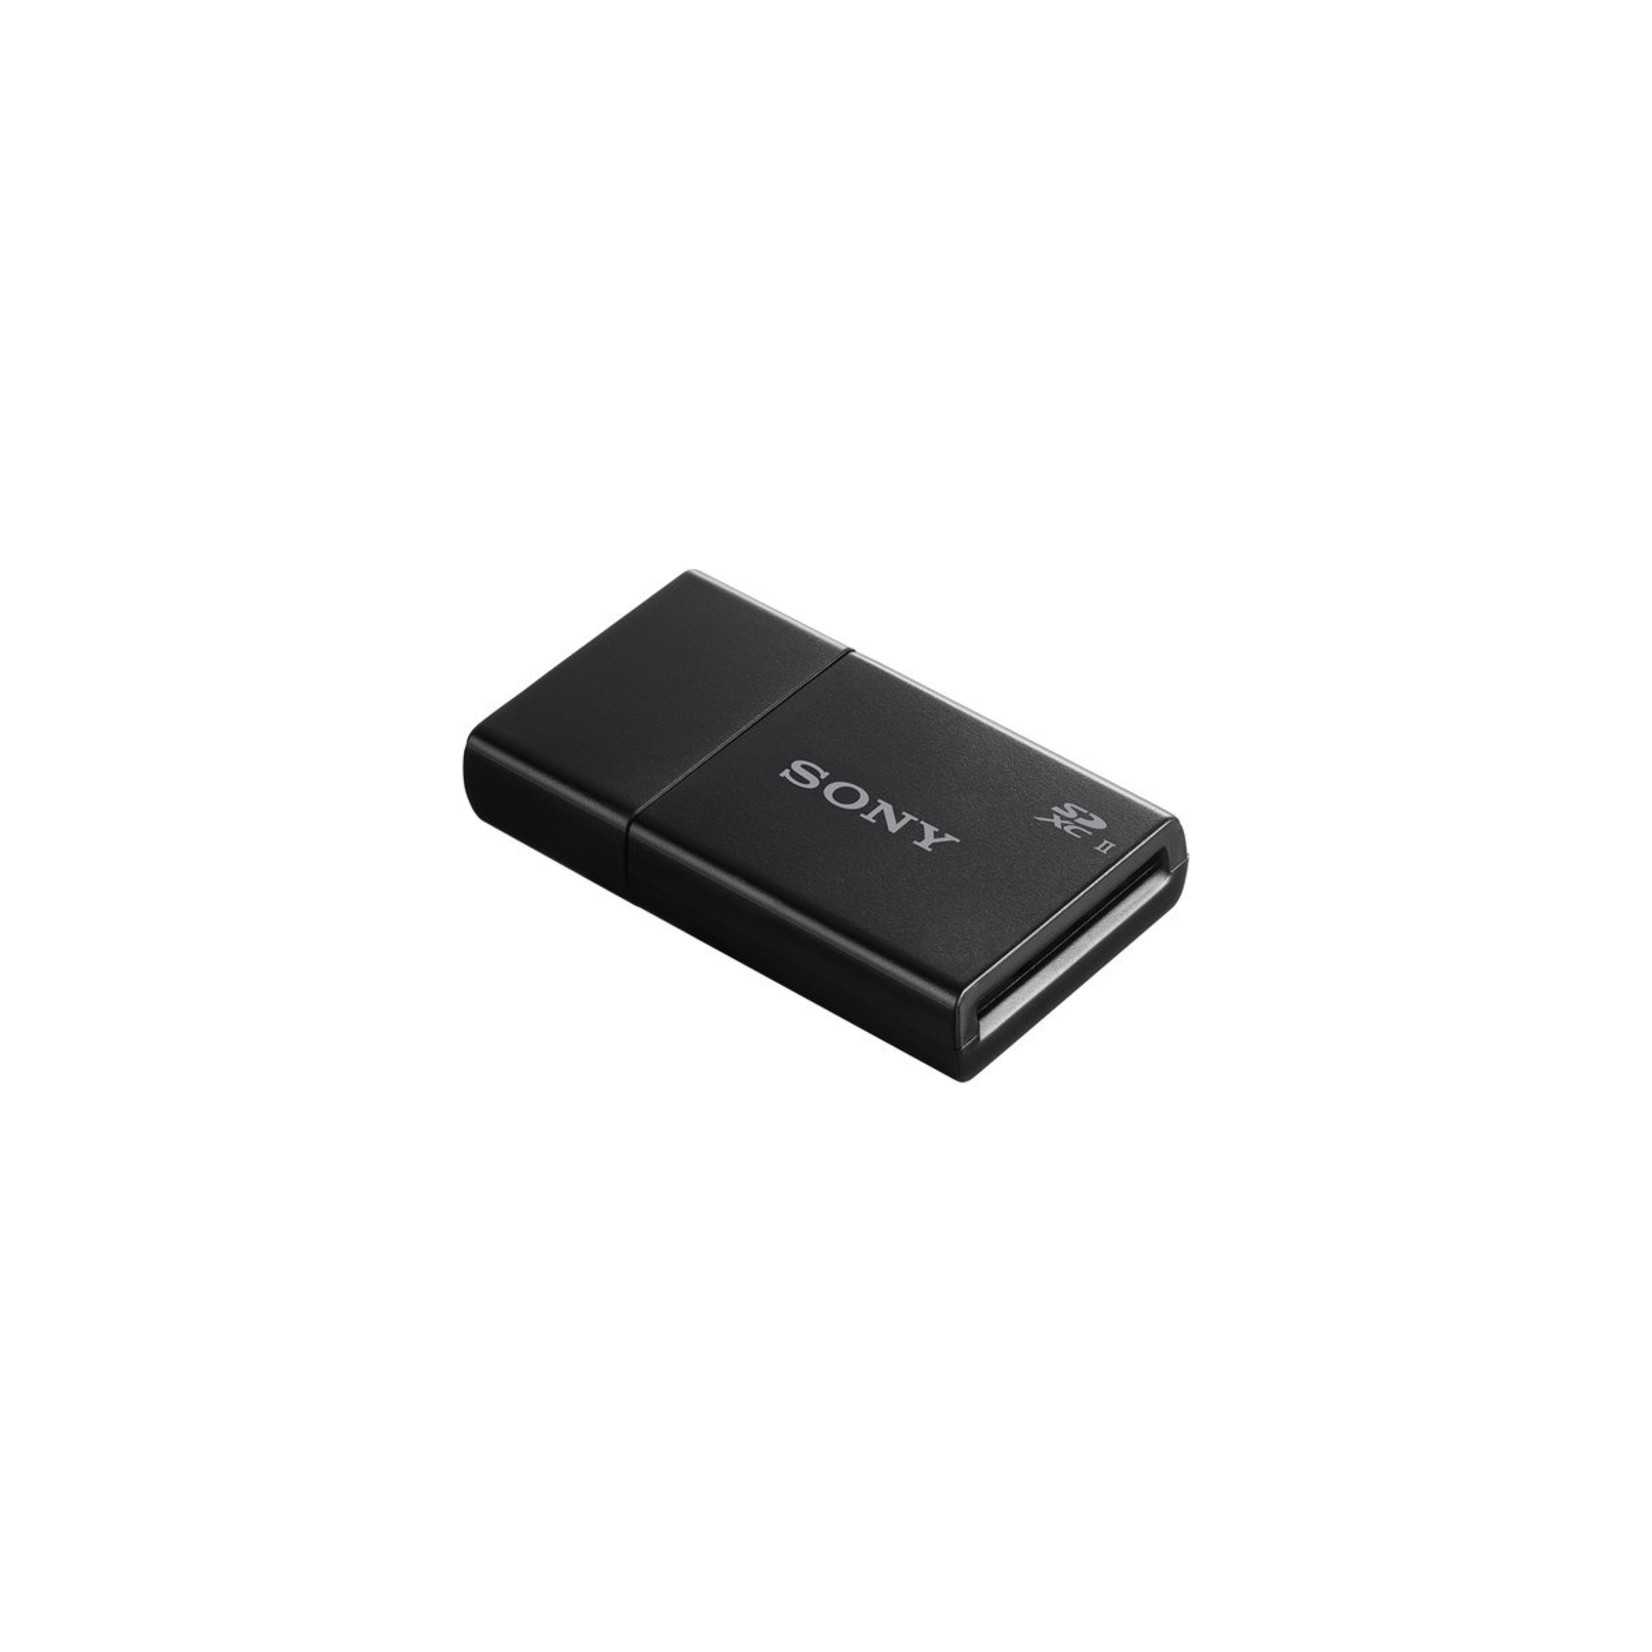 Sony UHS-II SD Memory Card Reader MRW-S1/T B&H Photo Video